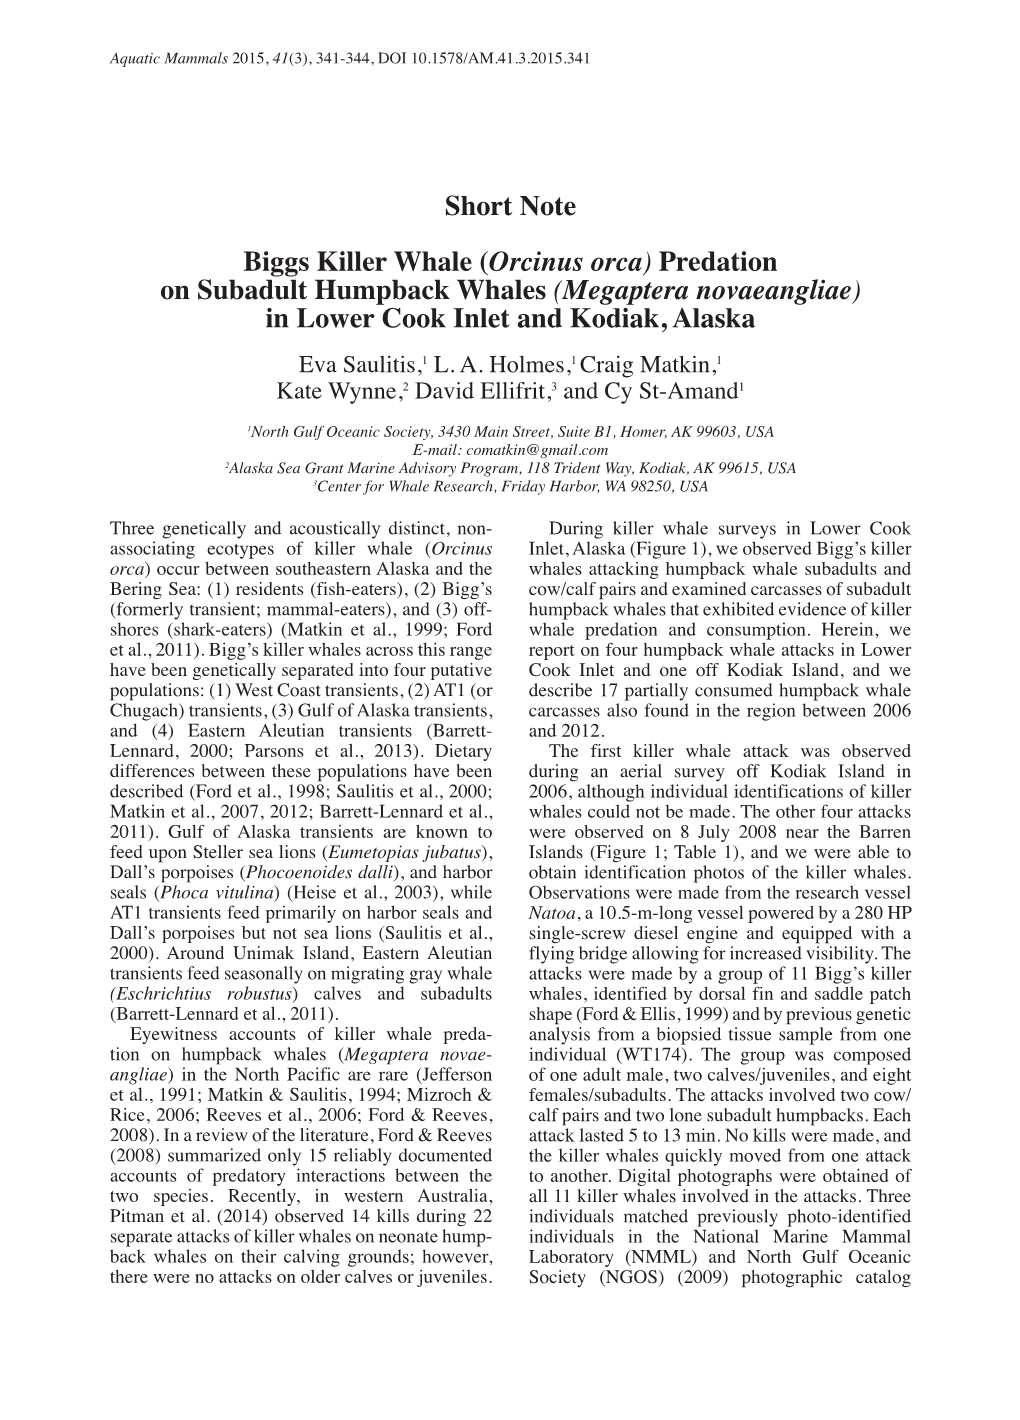 Short Note Biggs Killer Whale (Orcinus Orca) Predation on Subadult Humpback Whales (Megaptera Novaeangliae) in Lower Cook Inlet and Kodiak, Alaska Eva Saulitis,1 L